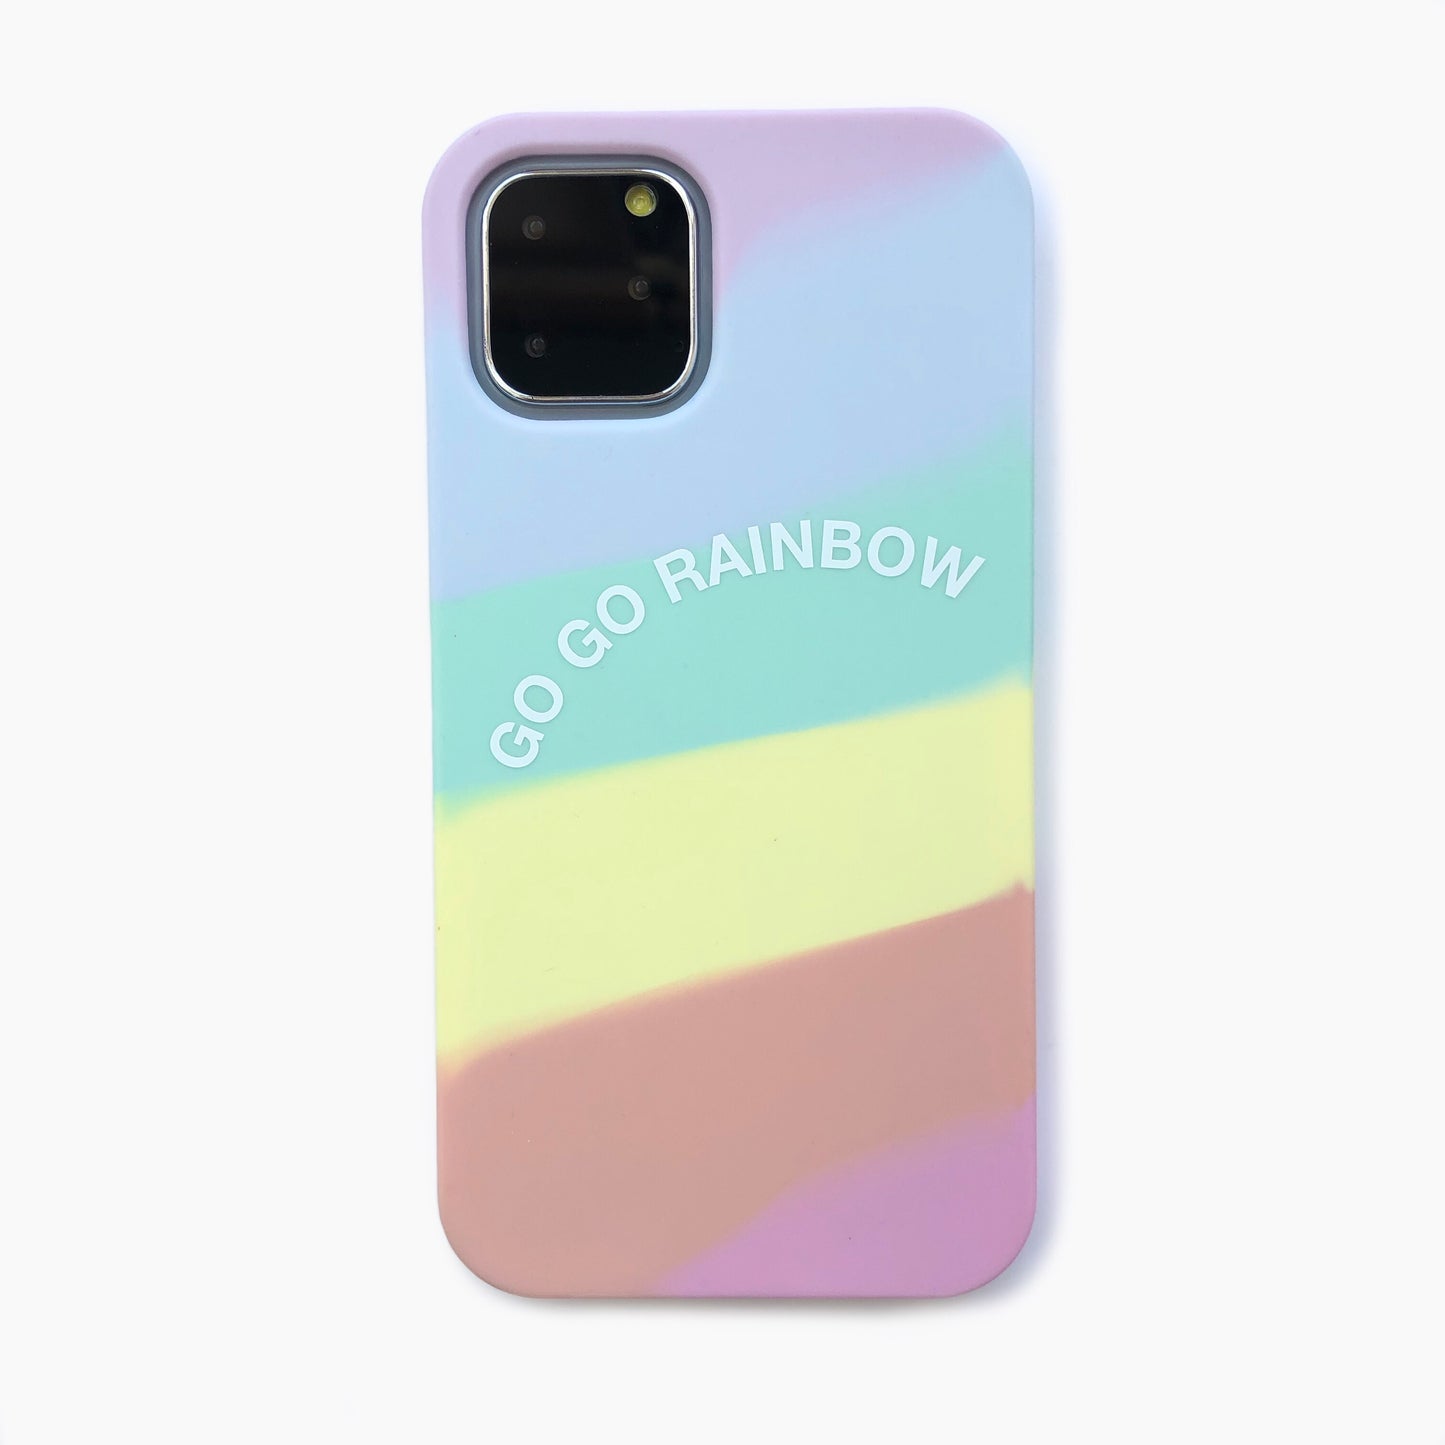 iPhone 11 Pro Simple Case - Go Go Rainbow (Pastel)